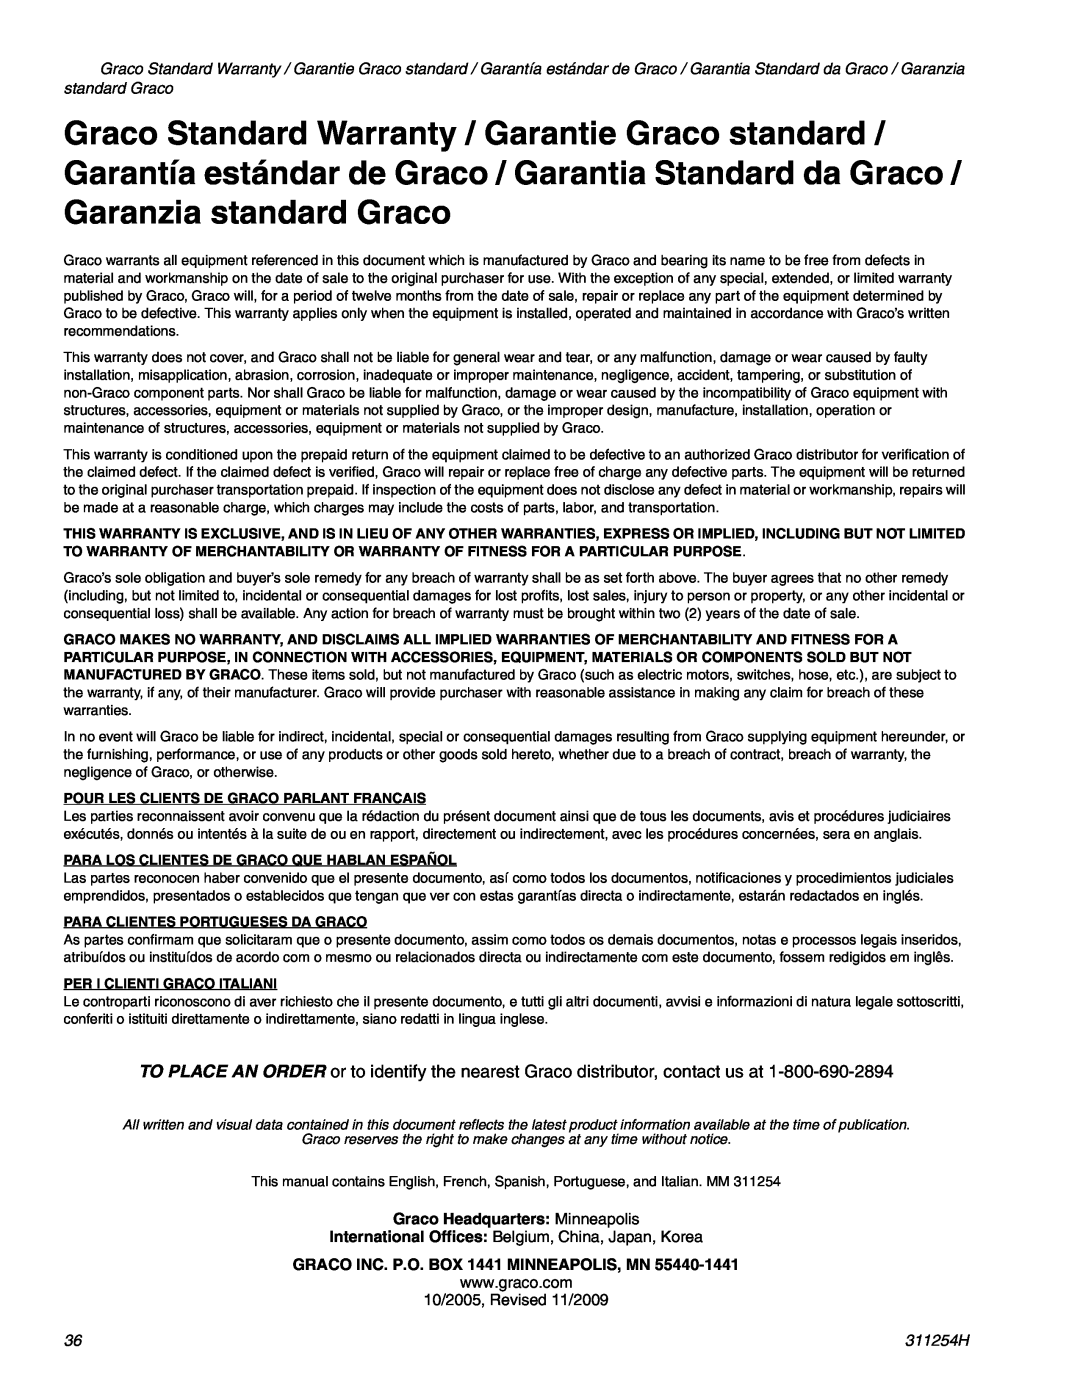 Graco Inc ti6941a Graco Headquarters Minneapolis, GRACO INC. P.O. BOX 1441 MINNEAPOLIS, MN, Per I Clienti Graco Italiani 